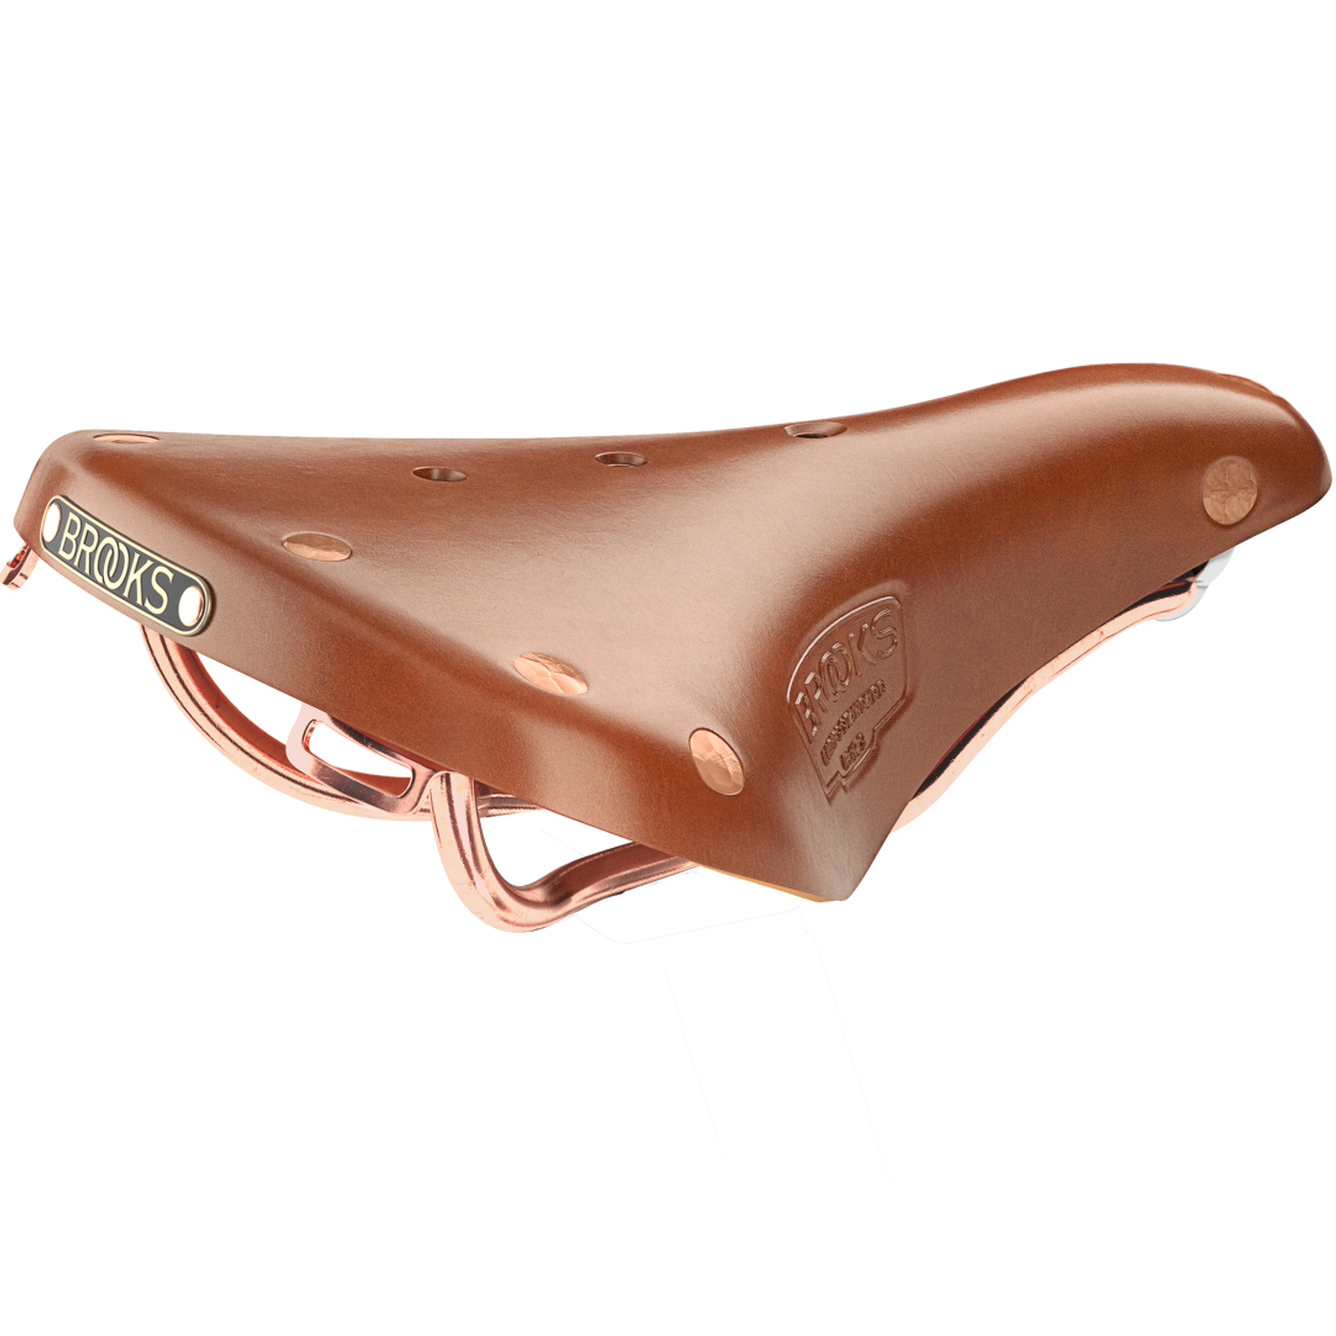 Productfoto van Brooks B17 Special Short Bend Leather Saddle - honey